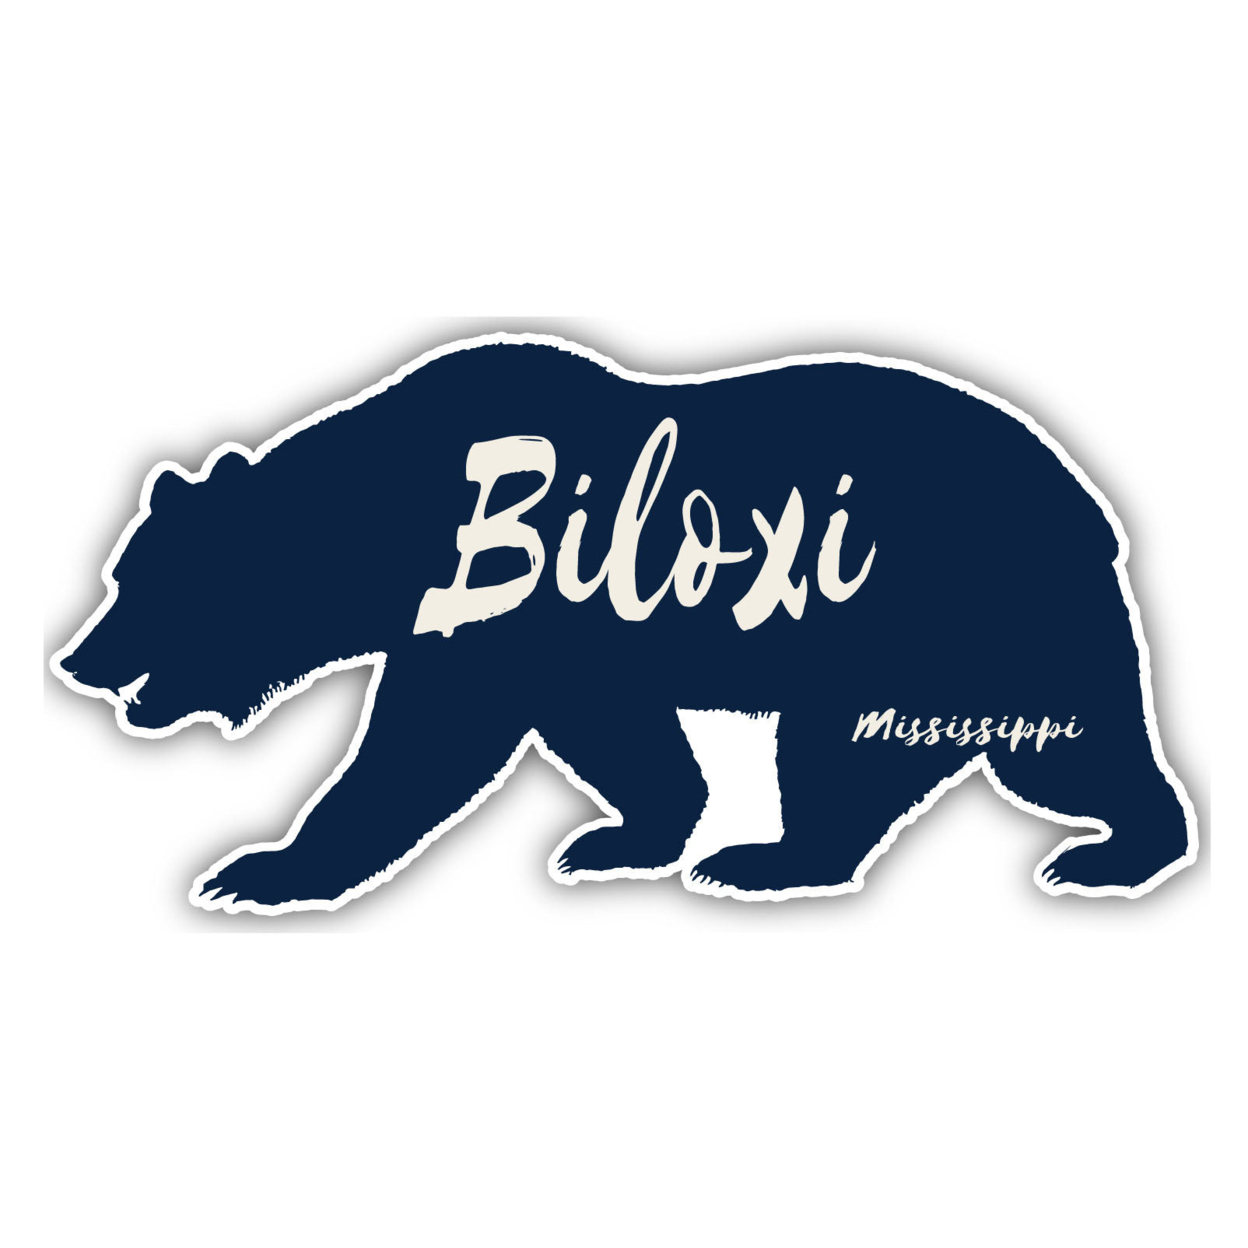 Biloxi Mississippi Souvenir Decorative Stickers (Choose Theme And Size) - Single Unit, 12-Inch, Camp Life